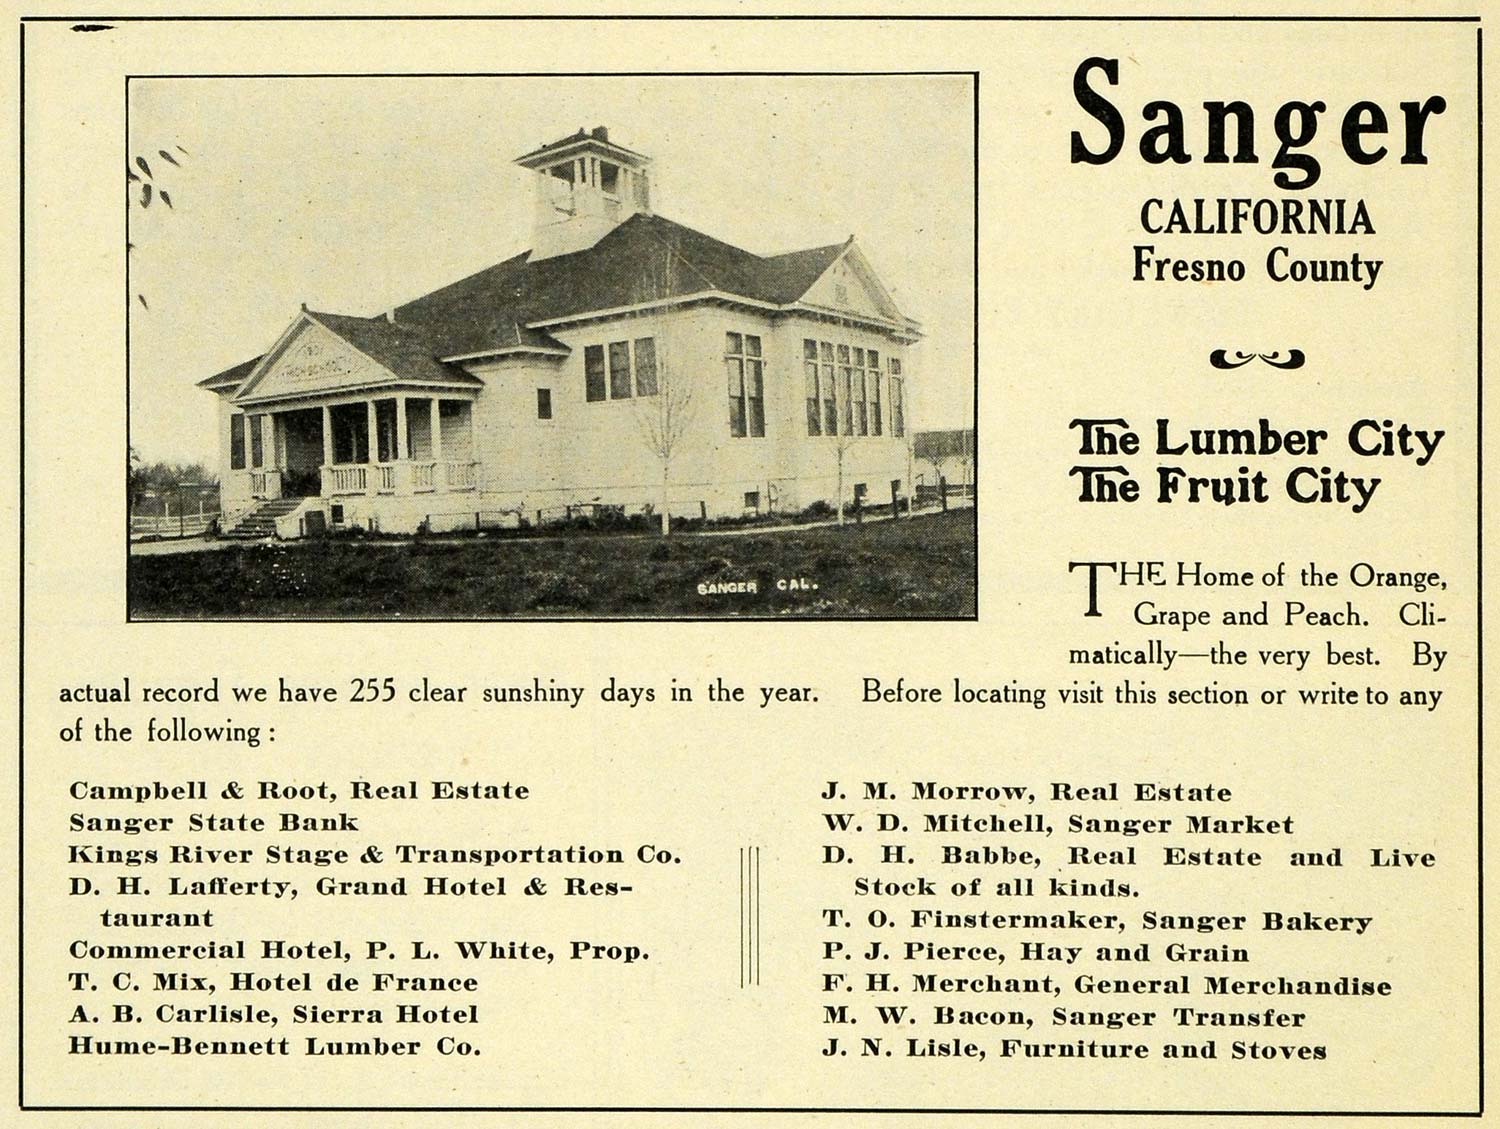 1908 Ad Sanger California Fresno County Real Estate - ORIGINAL ADVERTISING OWE1